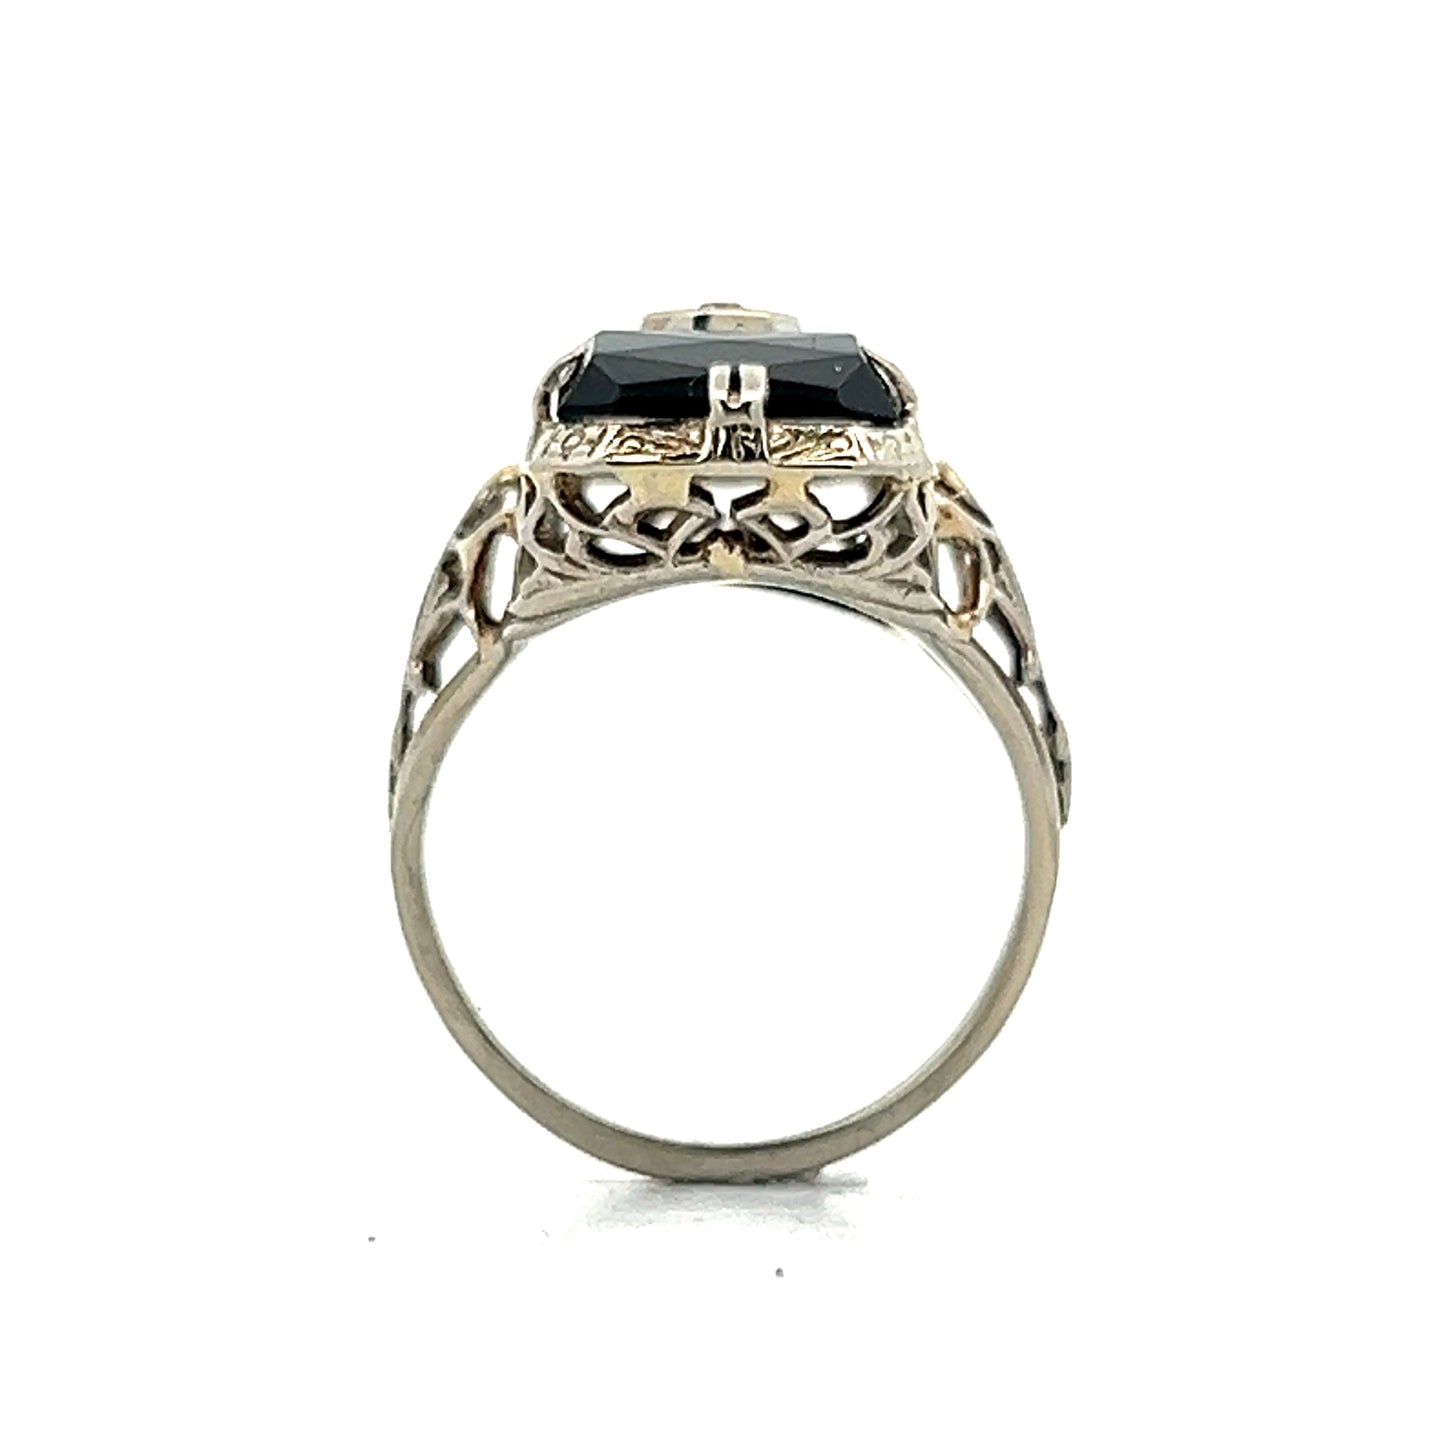 Vintage Art Deco Diamond & Onyx Cocktail Ring in 18k